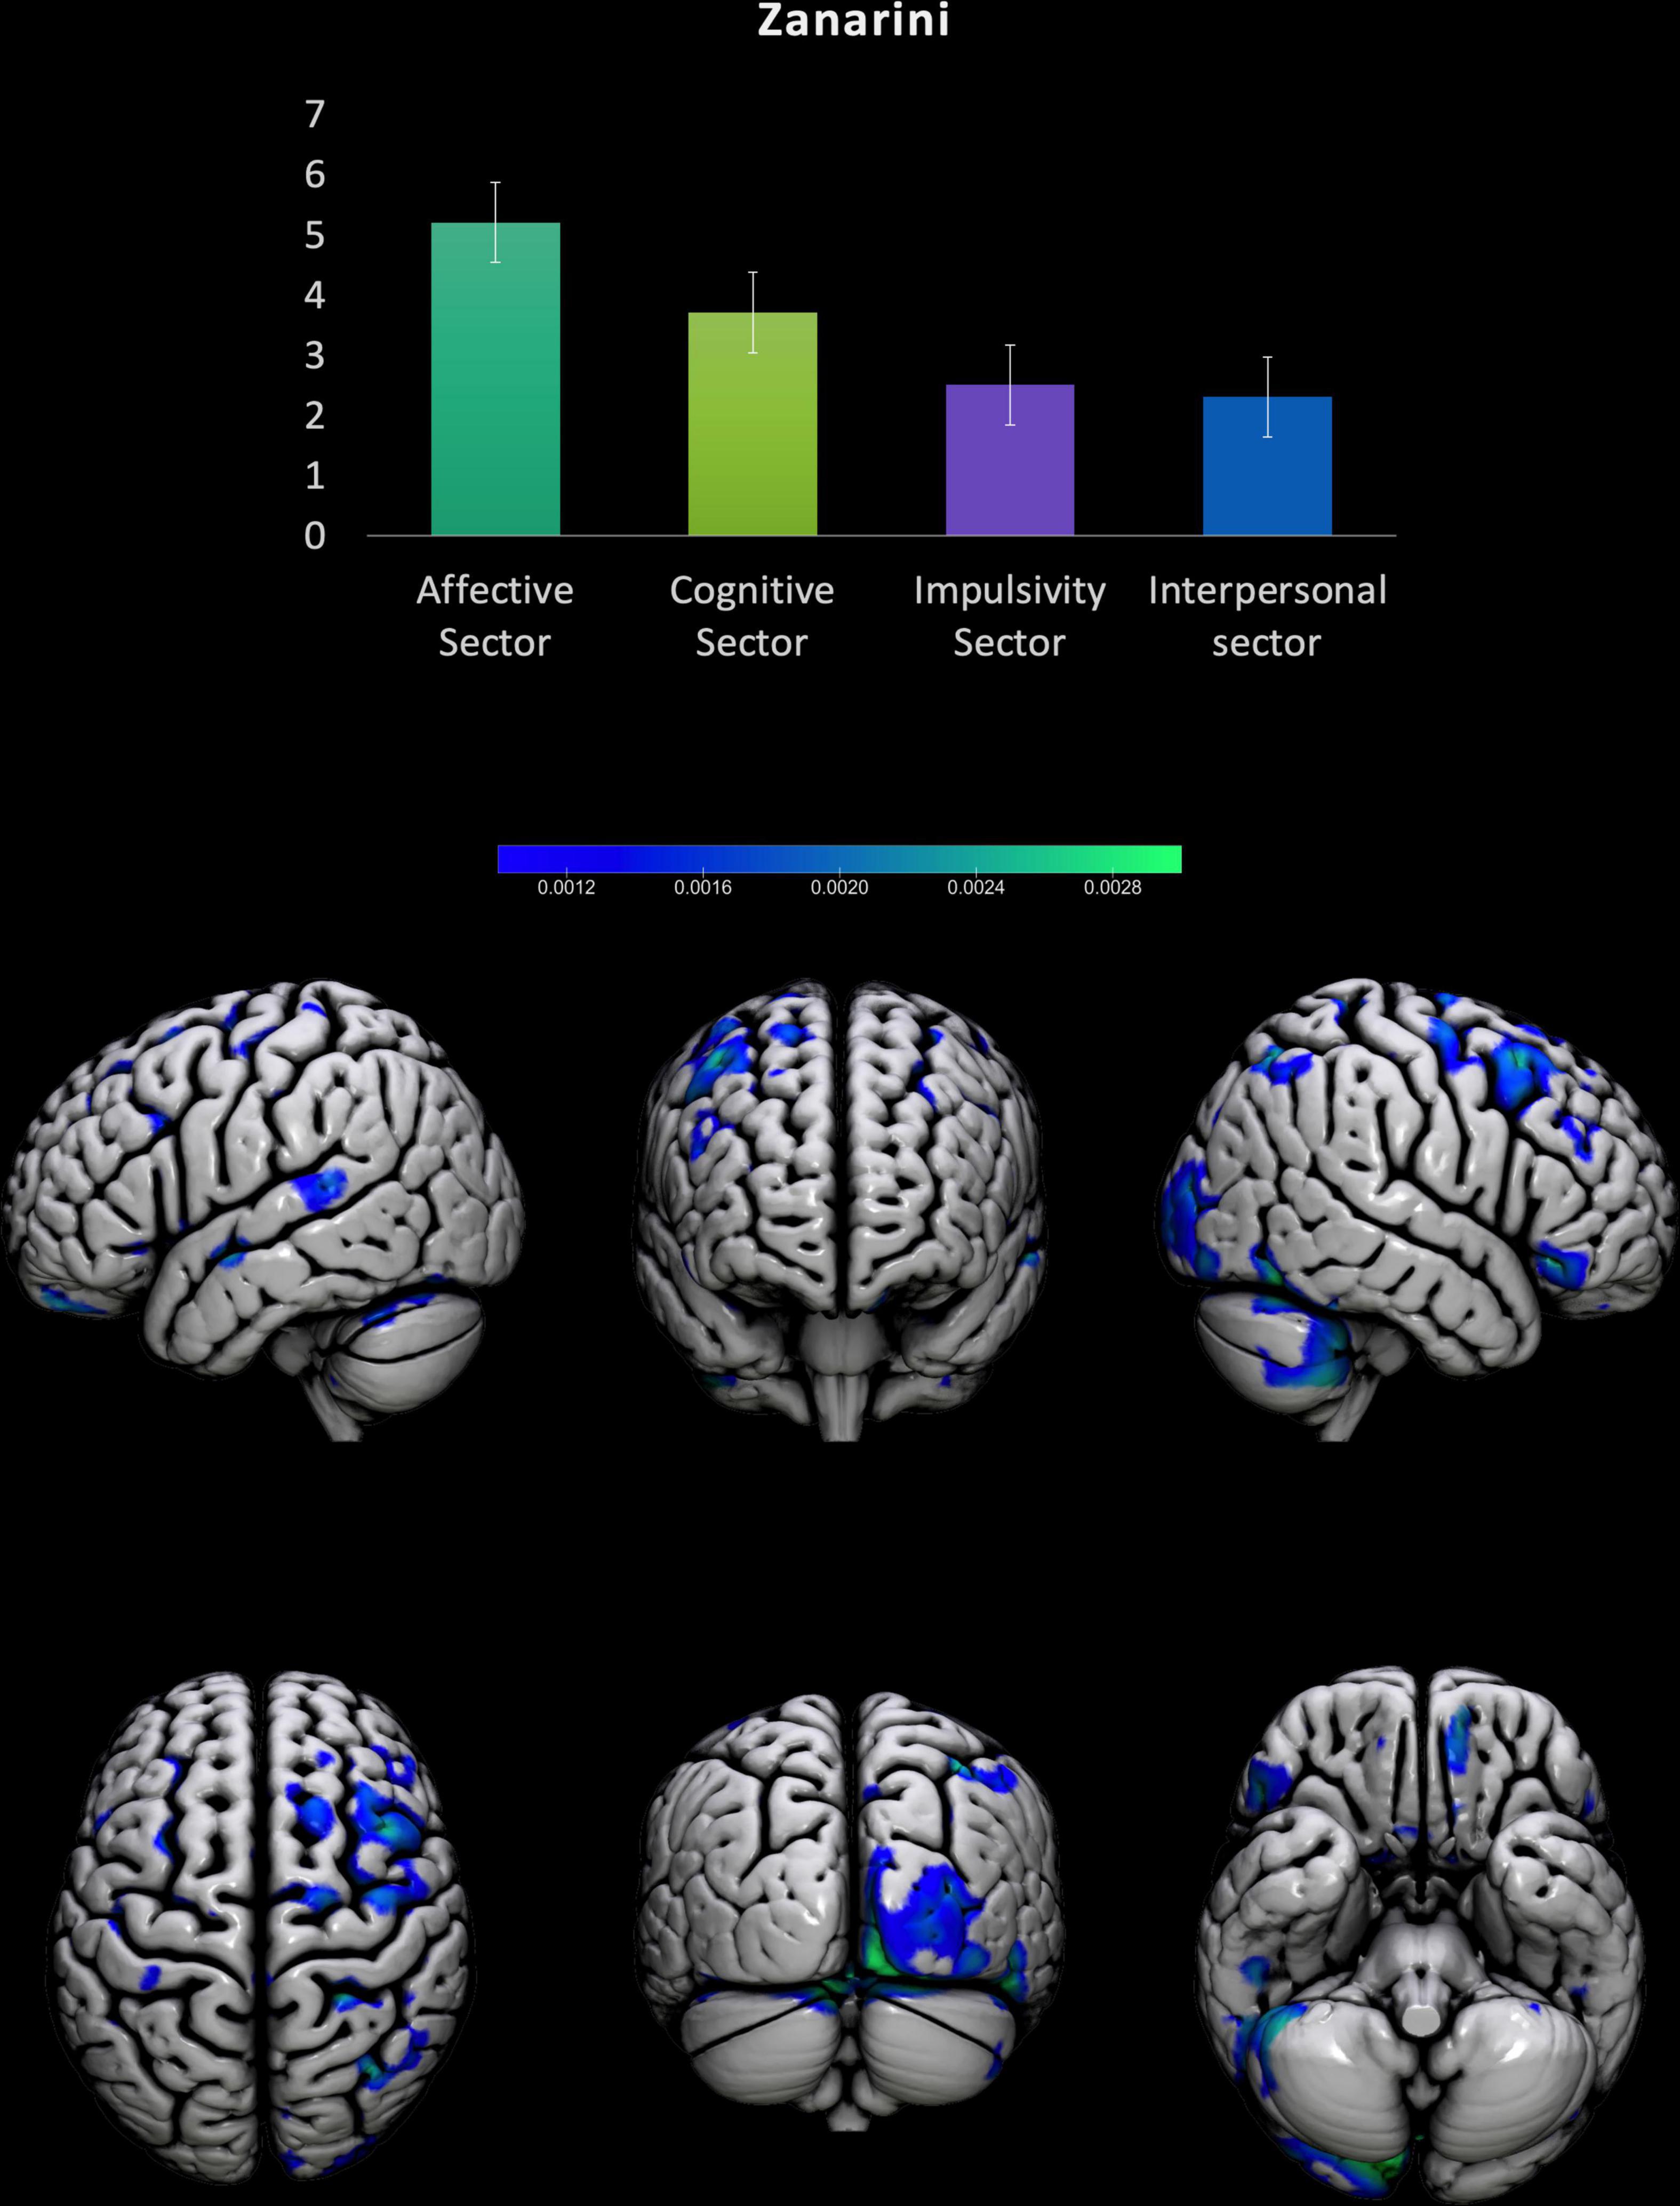 borderline personality disorder brain abnormalities